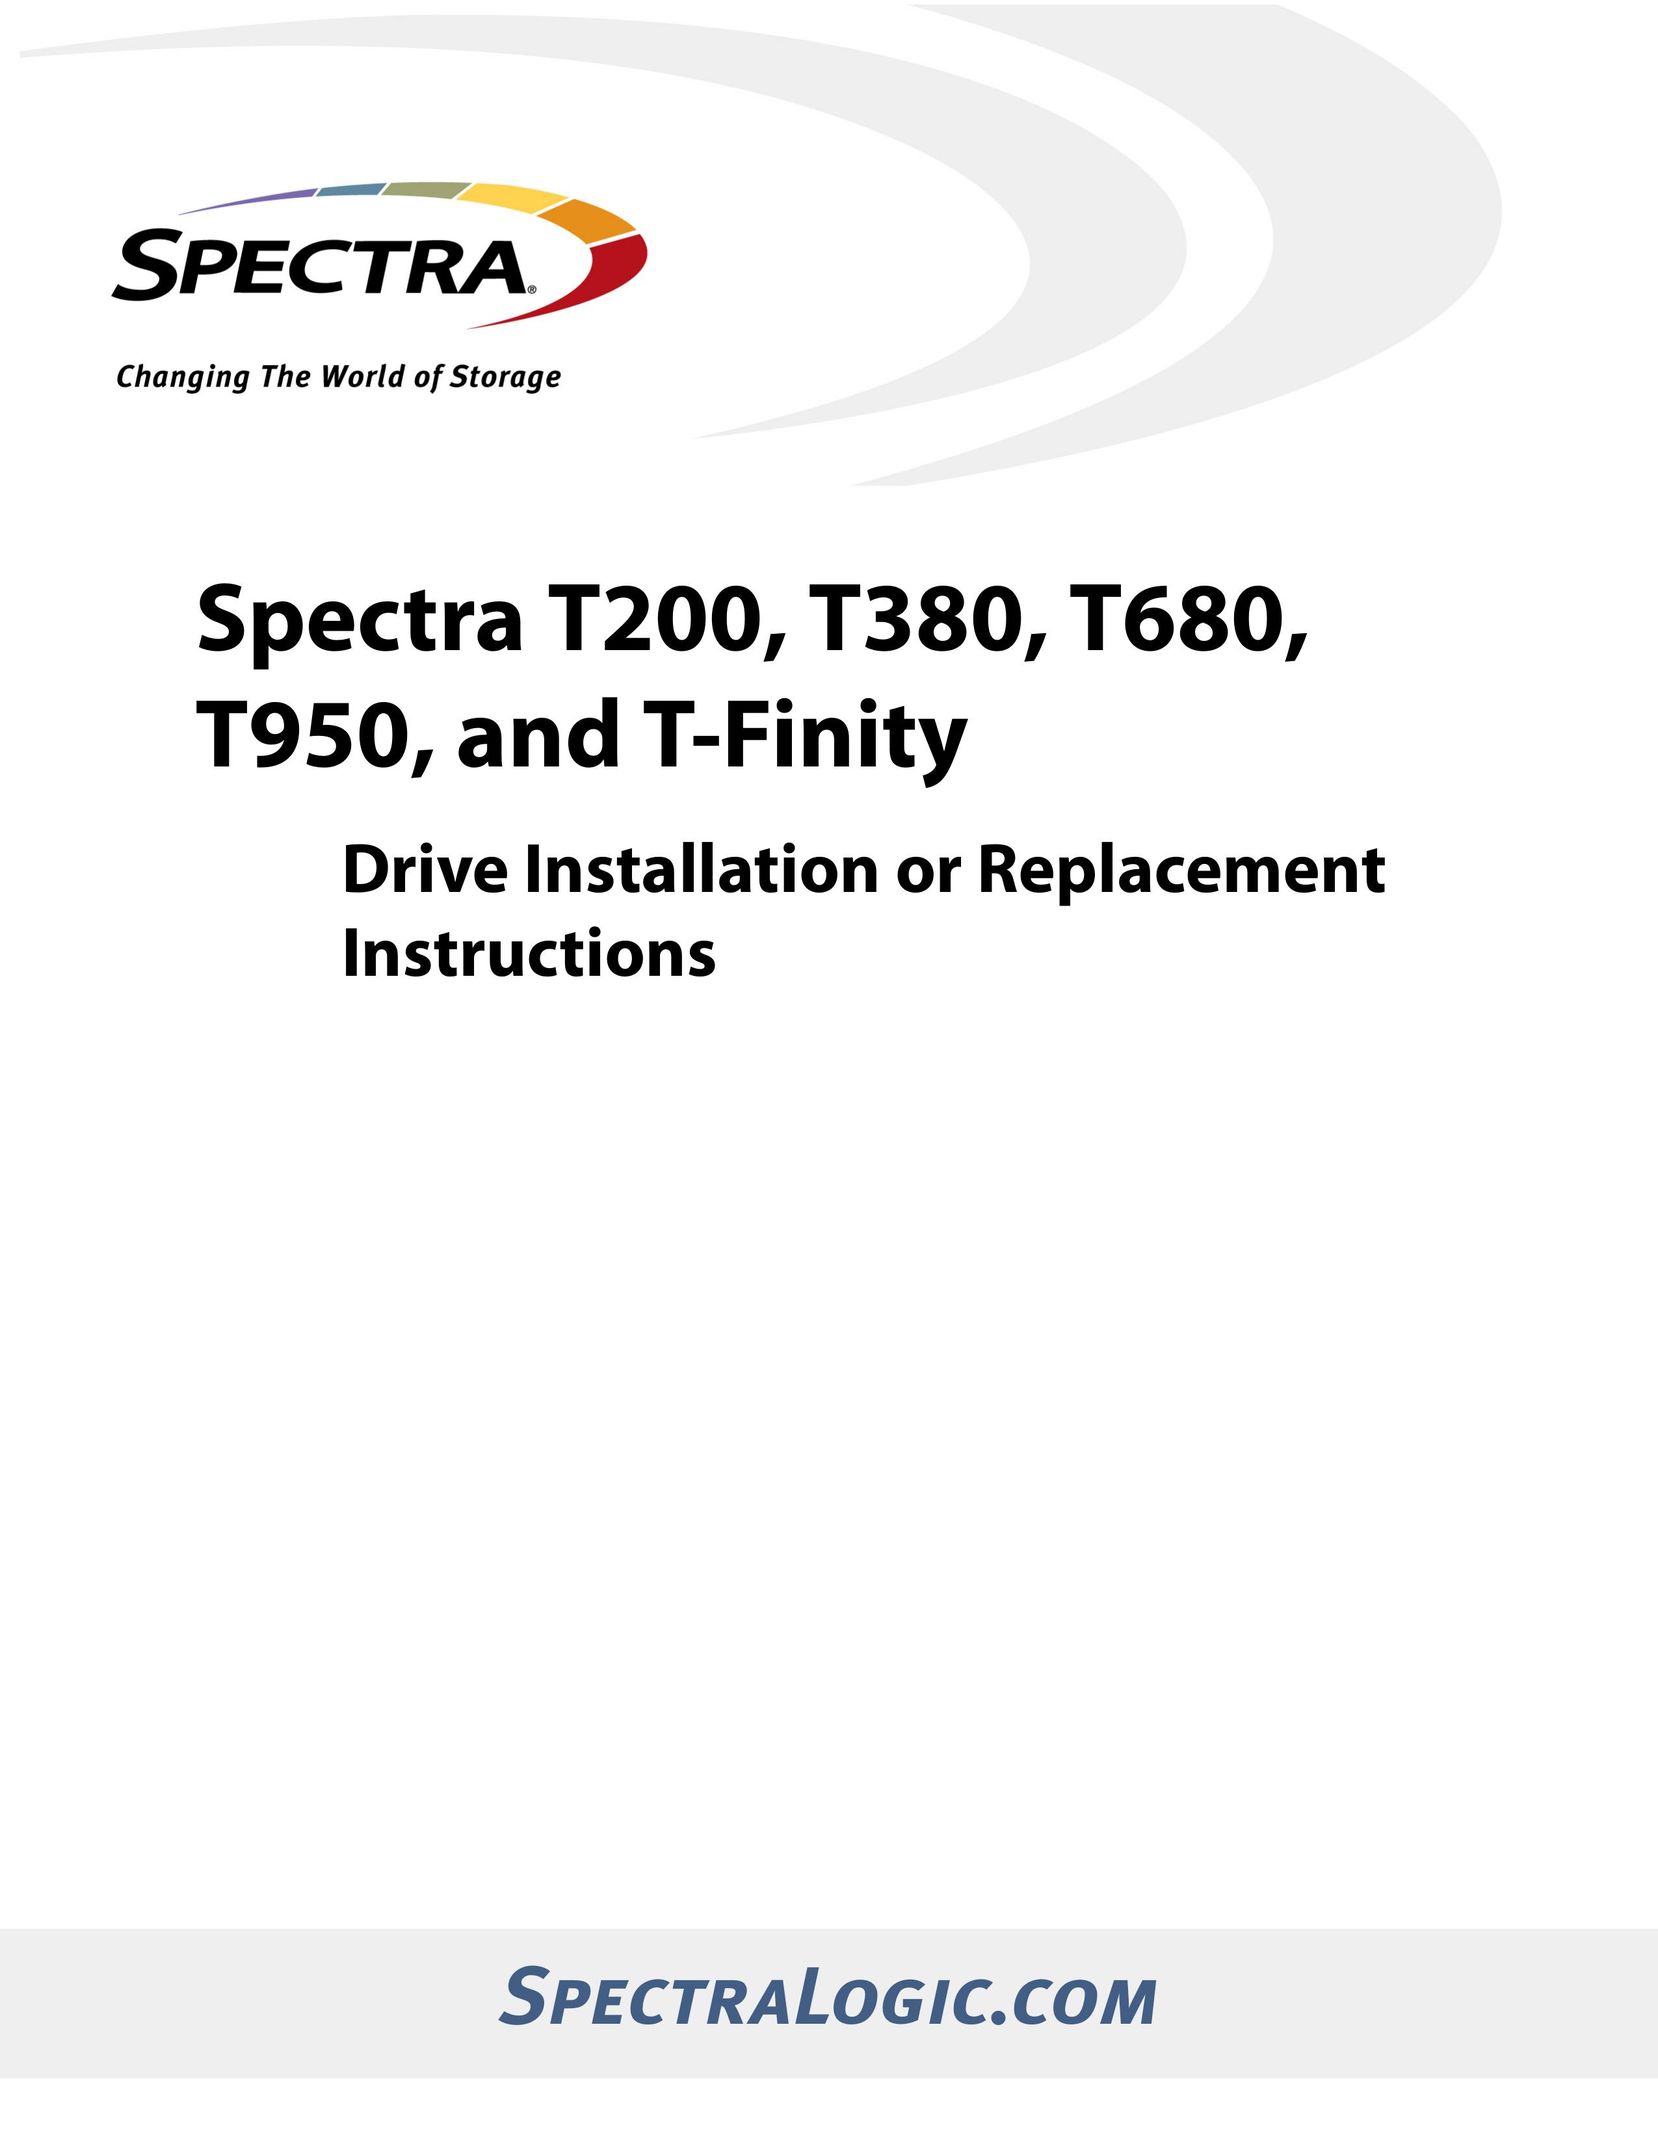 Spectra Logic T380 Computer Drive User Manual